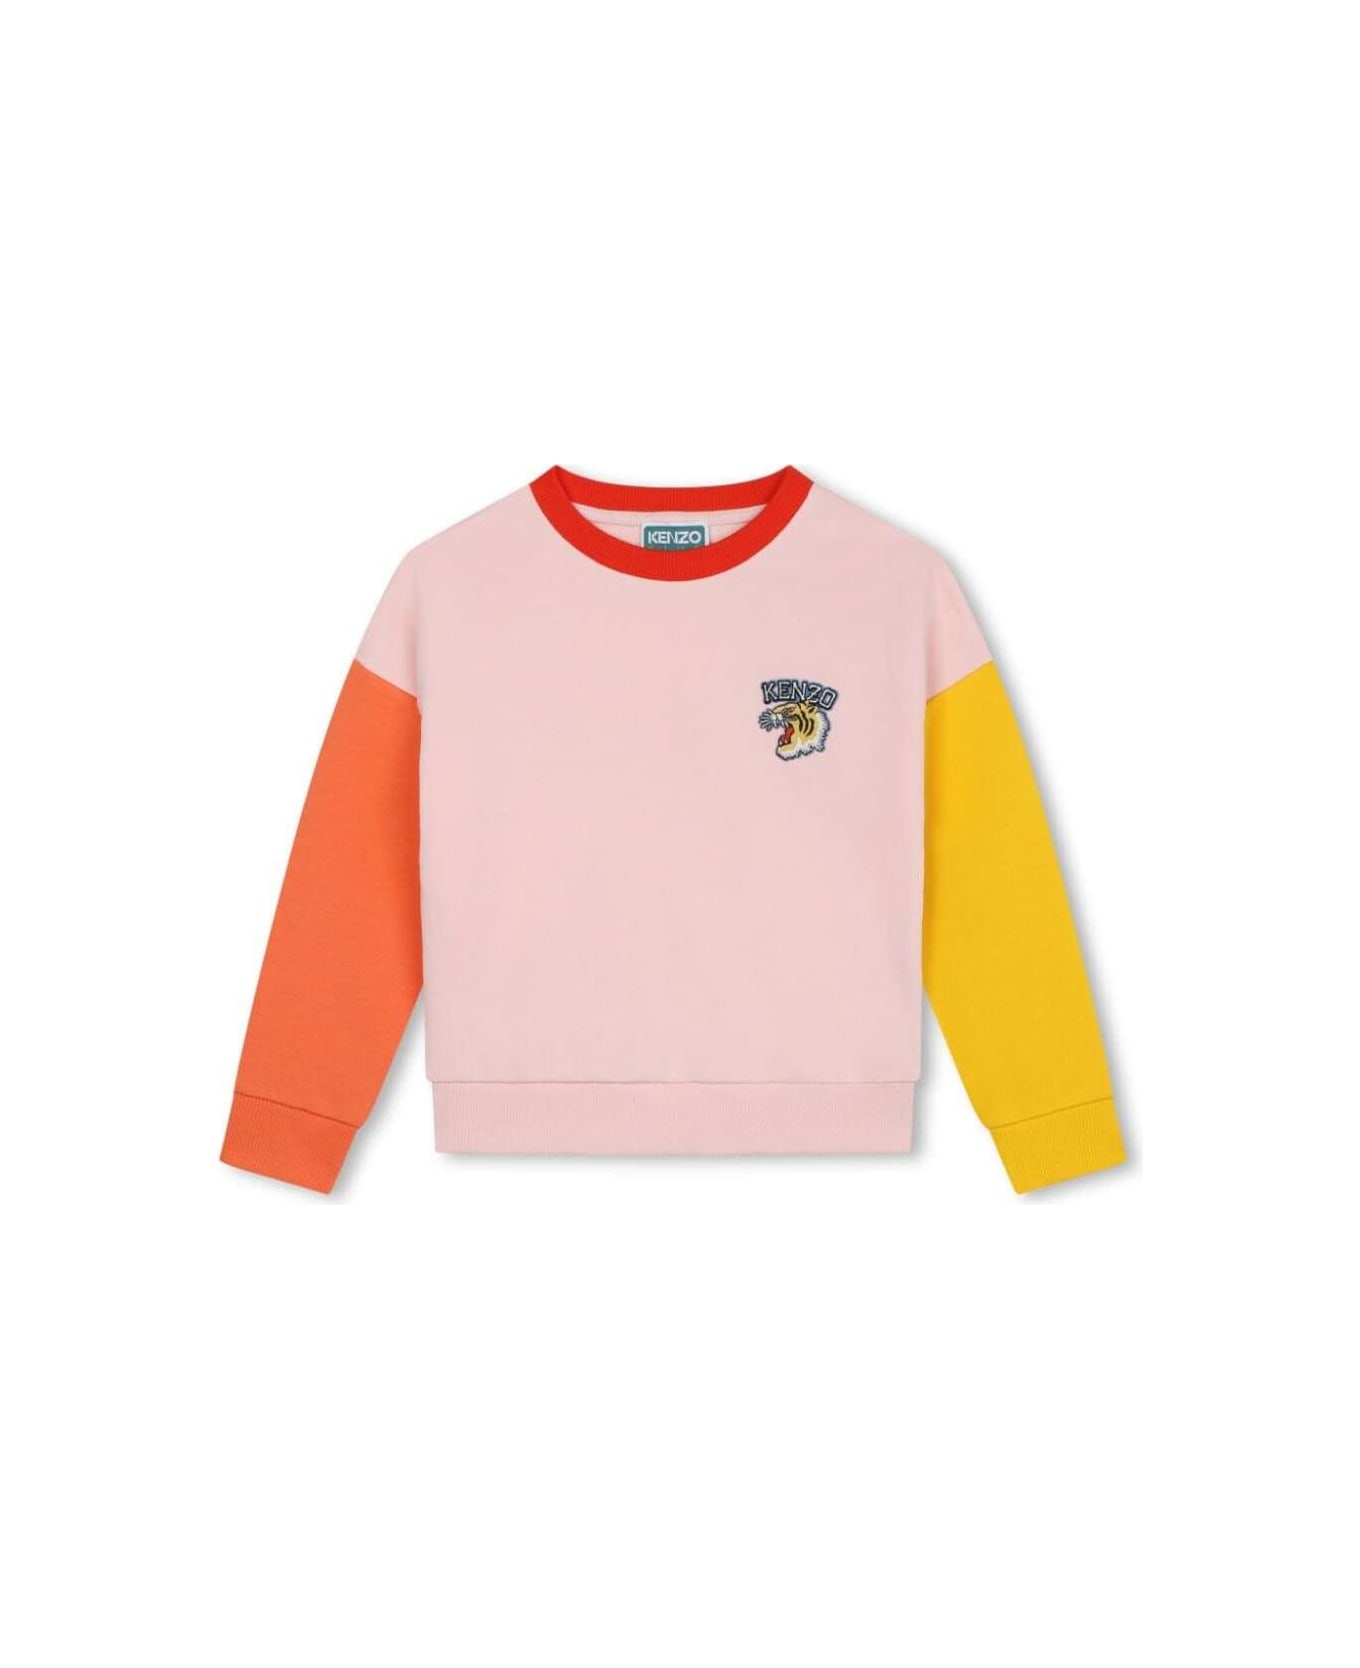 Kenzo Kids K6024146t - Pink